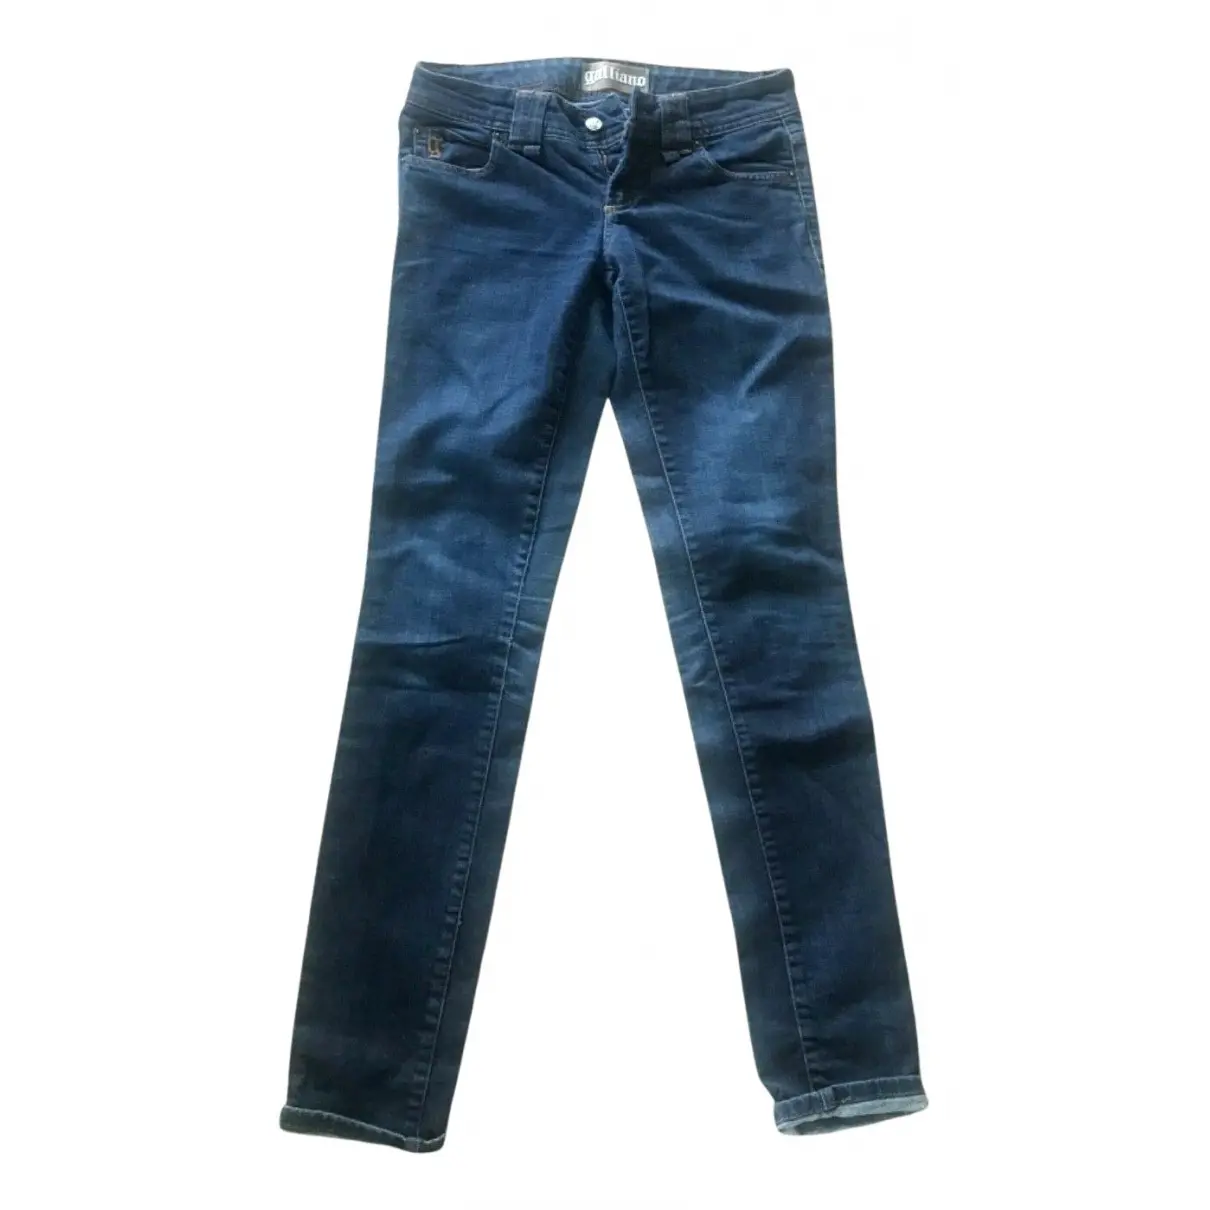 Slim jeans John Galliano - Vintage